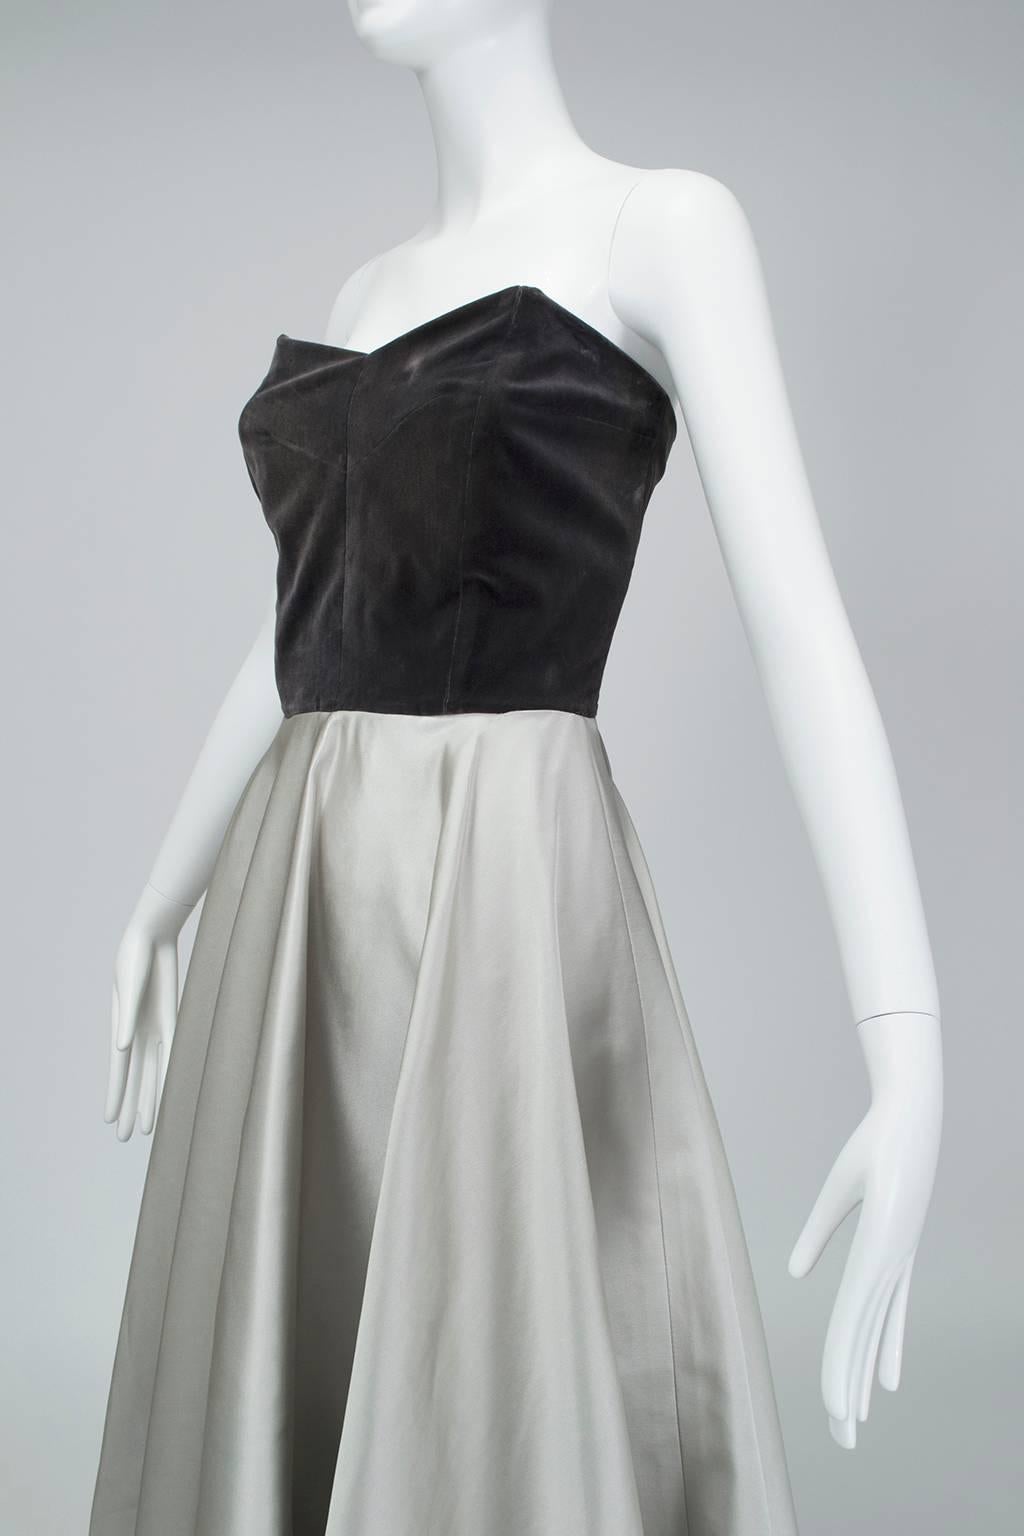 gray strapless dress